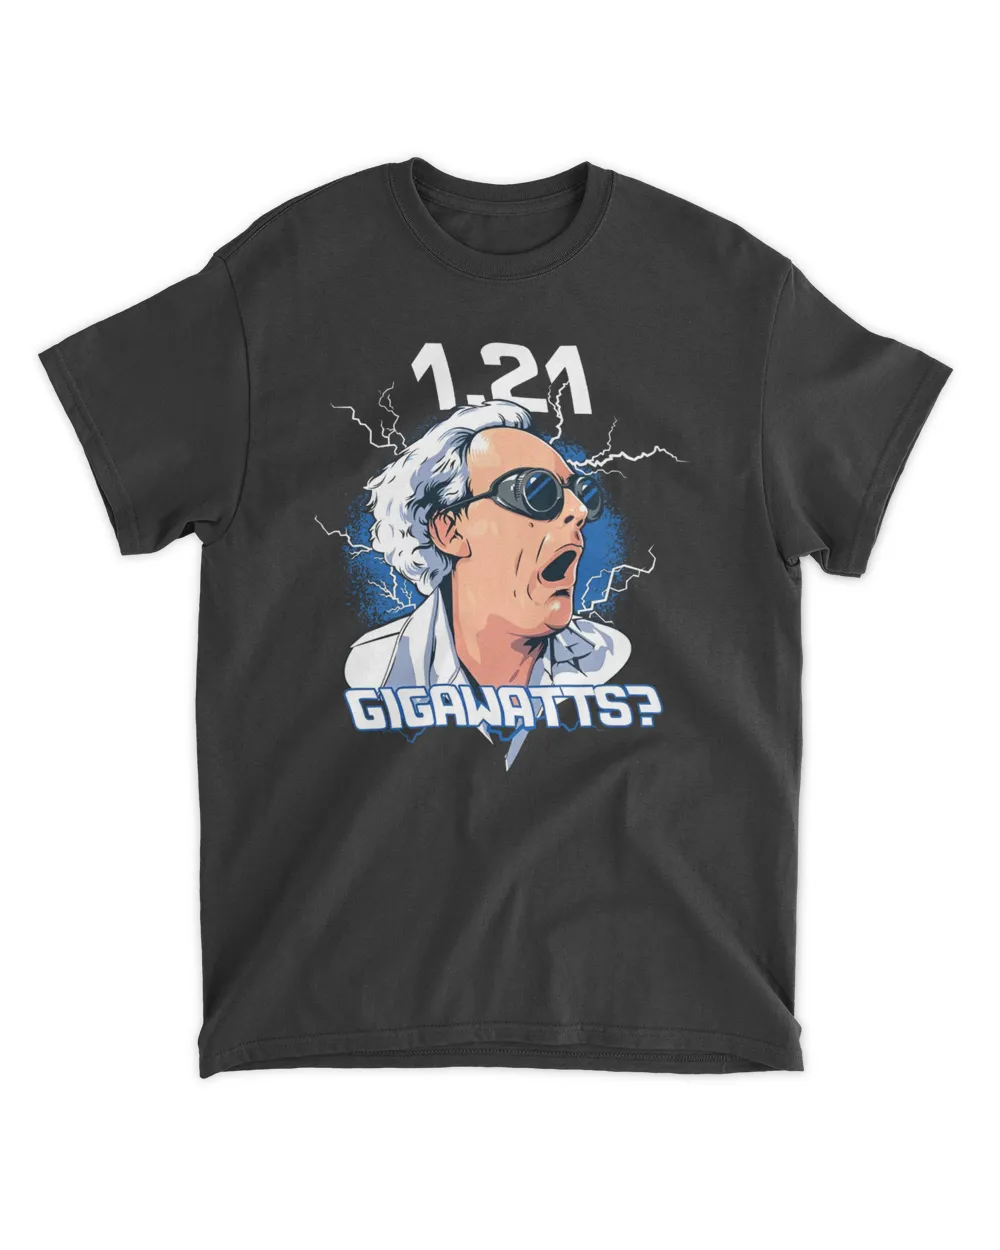 1.21 Gigawatts T Shirt